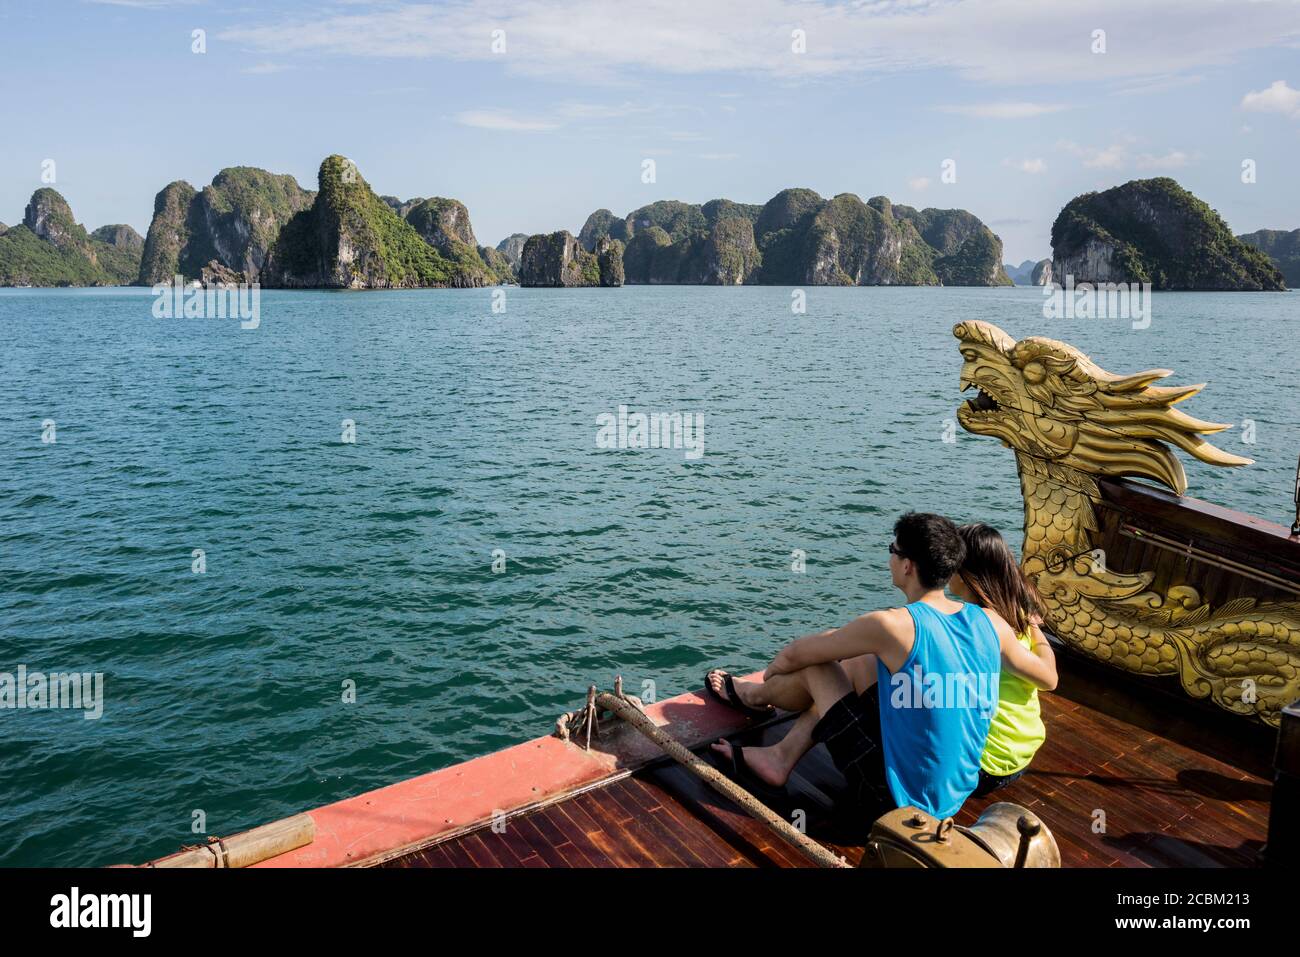 Couple enjoying view on cruise boat, Ha Long Bay, Vietnam Stock Photo